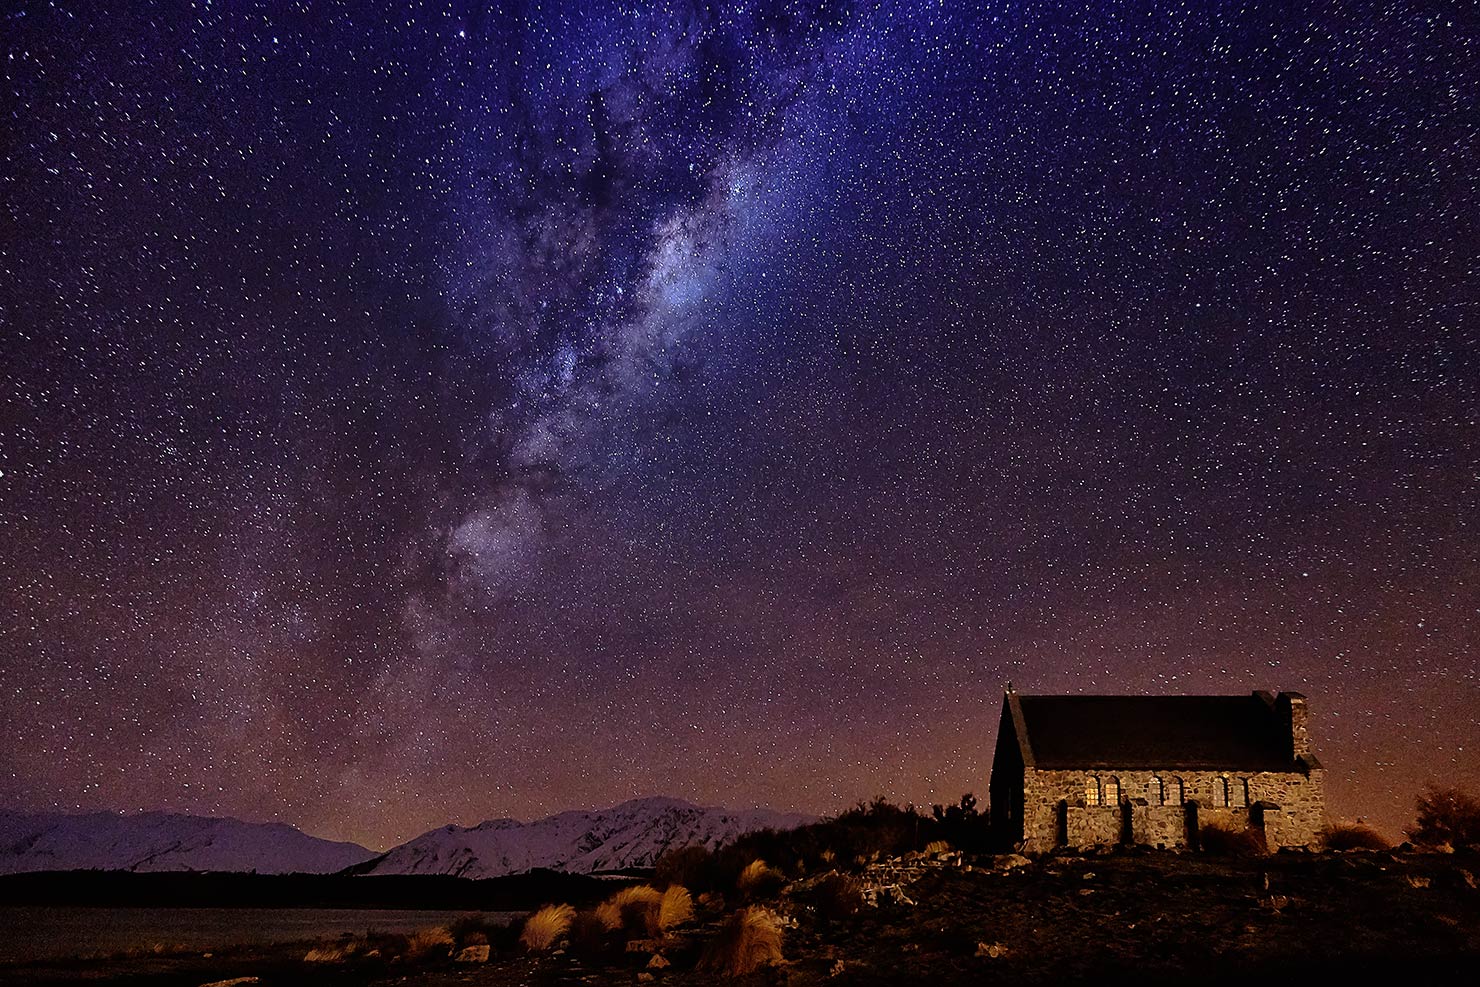 Church Good Shepherd Tekapo Lake Night Sky Photography New Zealand Milky Way Star Shooting Paul Reiffer Professional Landscape Photographer